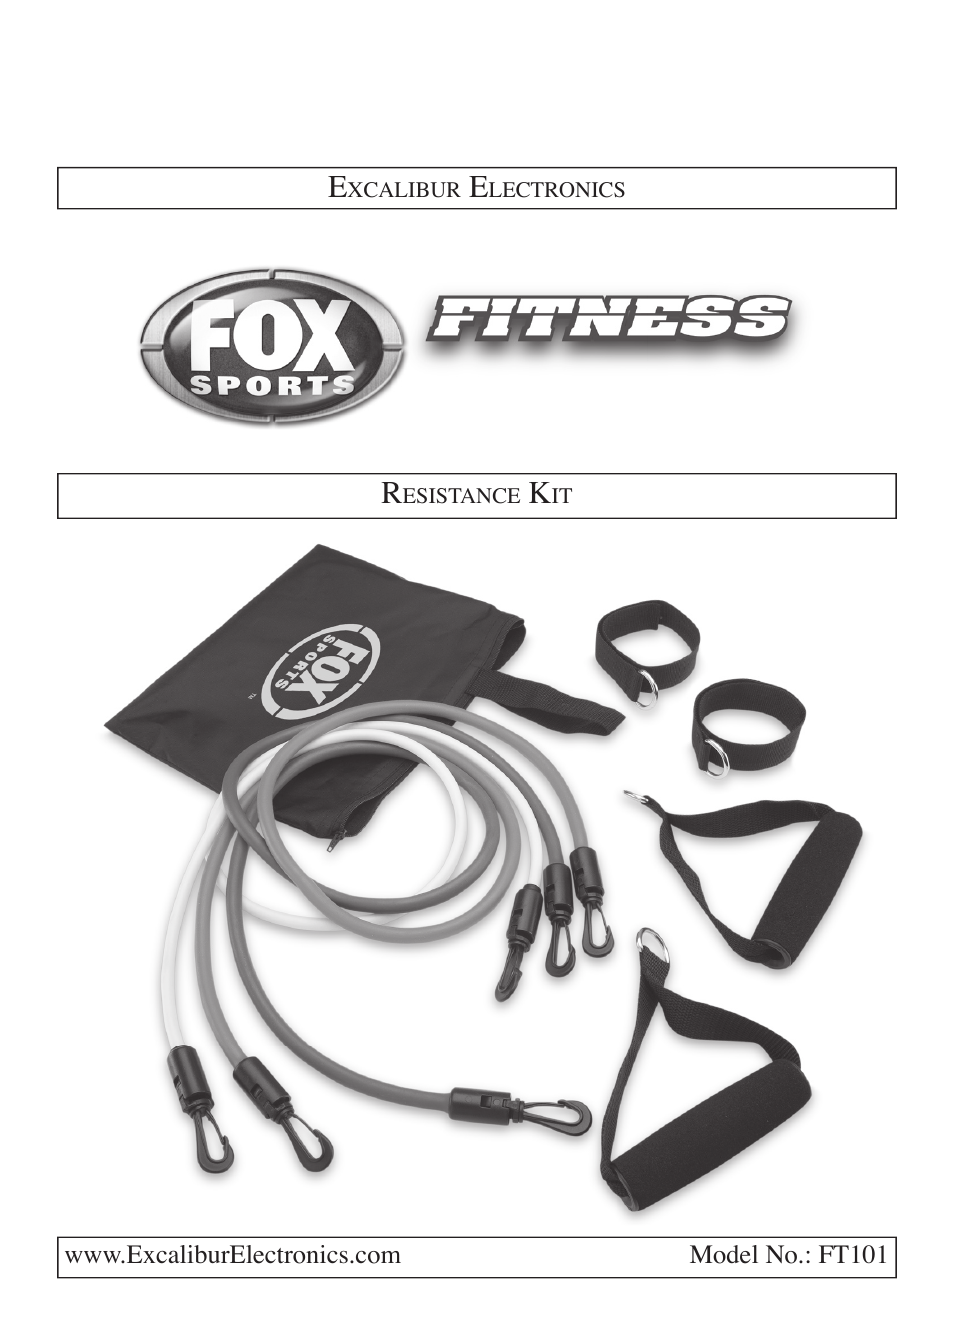 FT101 Fox Sports Fitness Resistance Kit